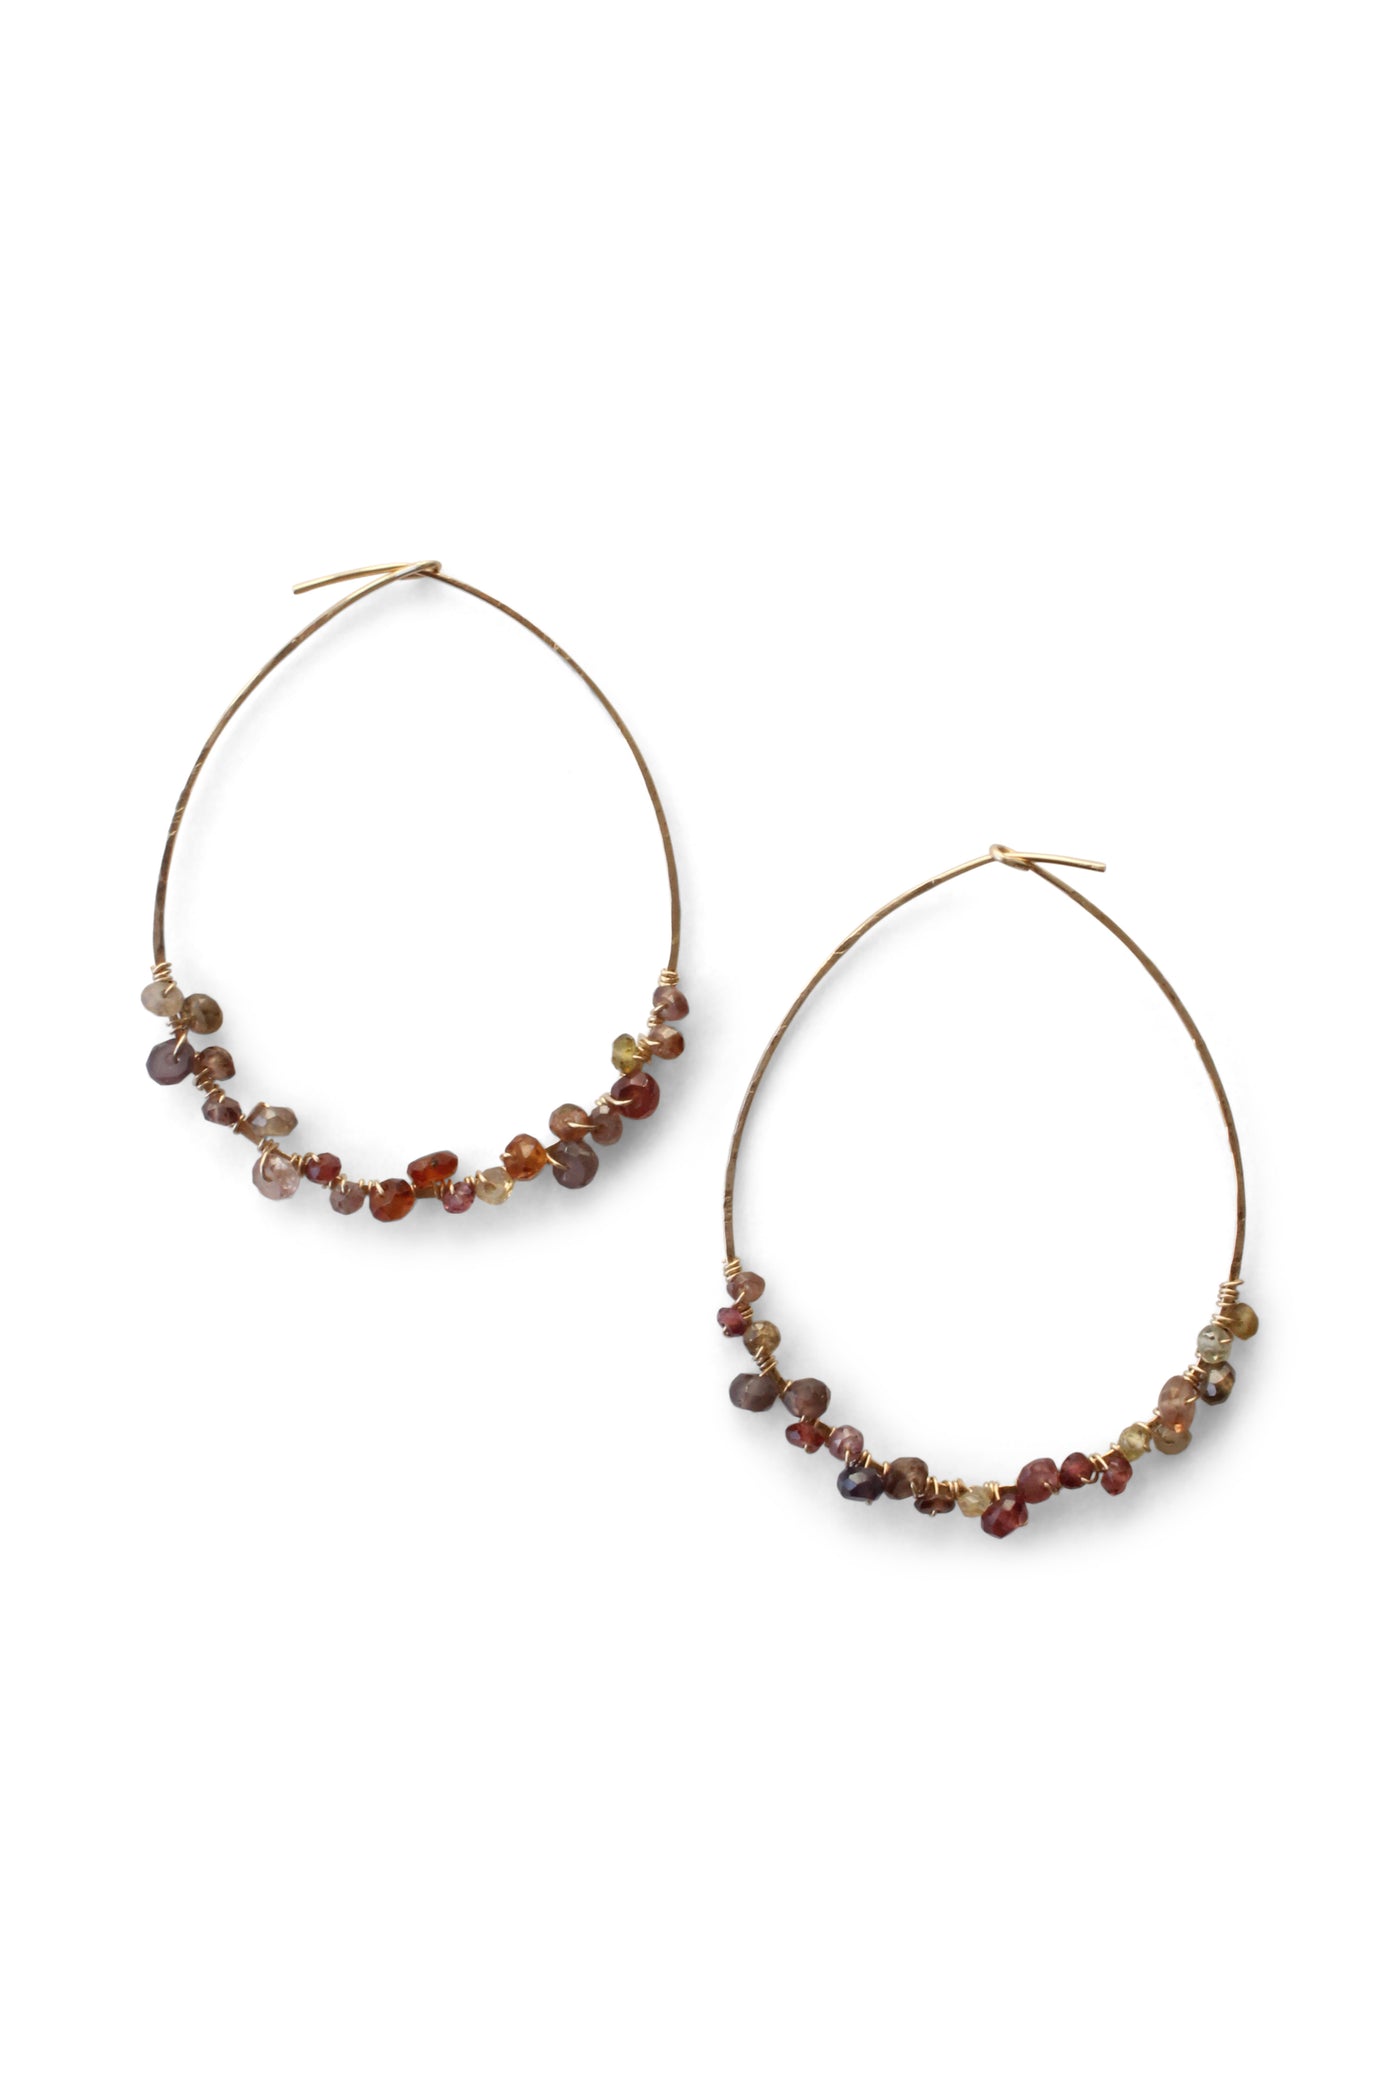 Garnet | Multi Color | Earth Tones | Hoop Earrings | Red | Handmade | Wire Wrapped | Rebecca Scott Jewelry | Bridal Jewelry | Earrings | Gold Hoop Earrings | Modern Bohemian | Evening Jewelry 